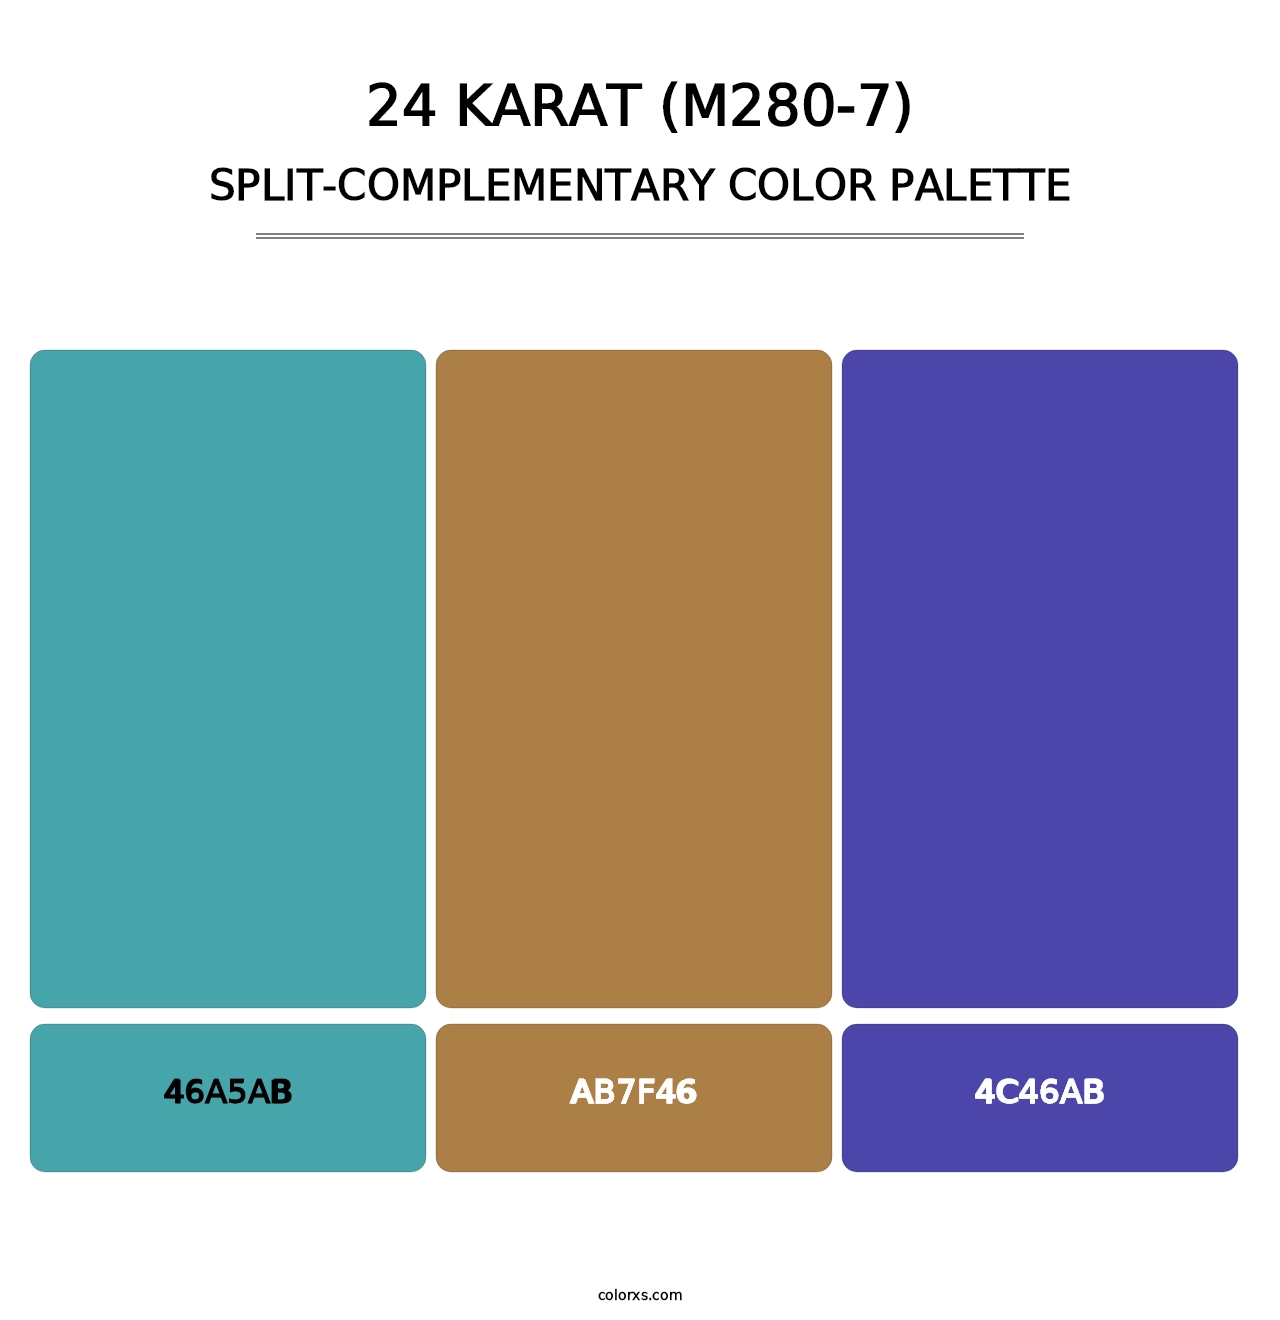 24 Karat (M280-7) - Split-Complementary Color Palette